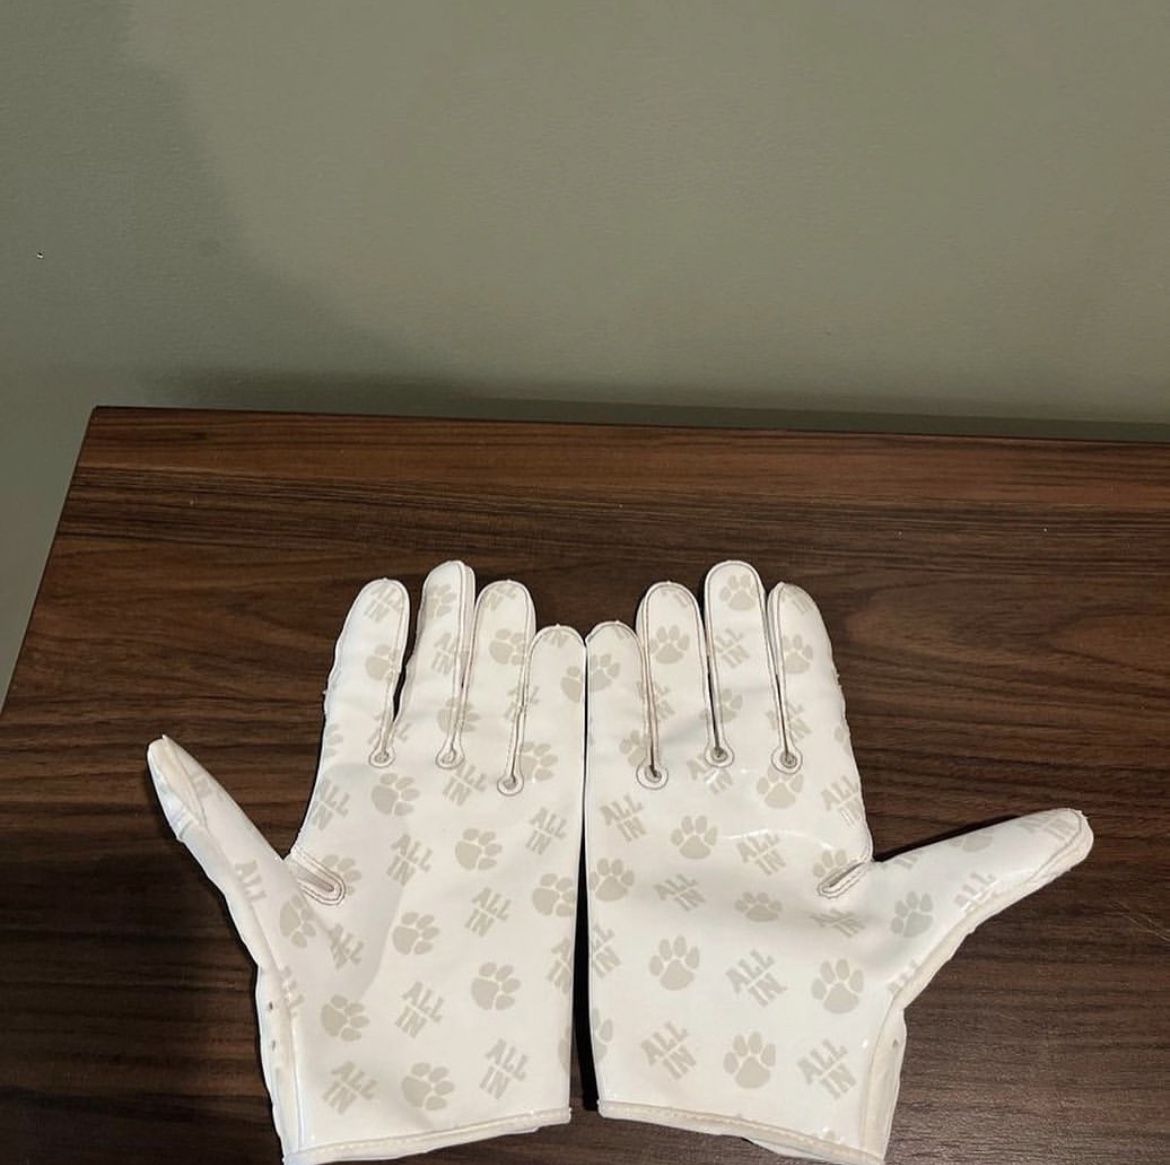 Clemson football gloves for Sale in Miami, FL - OfferUp